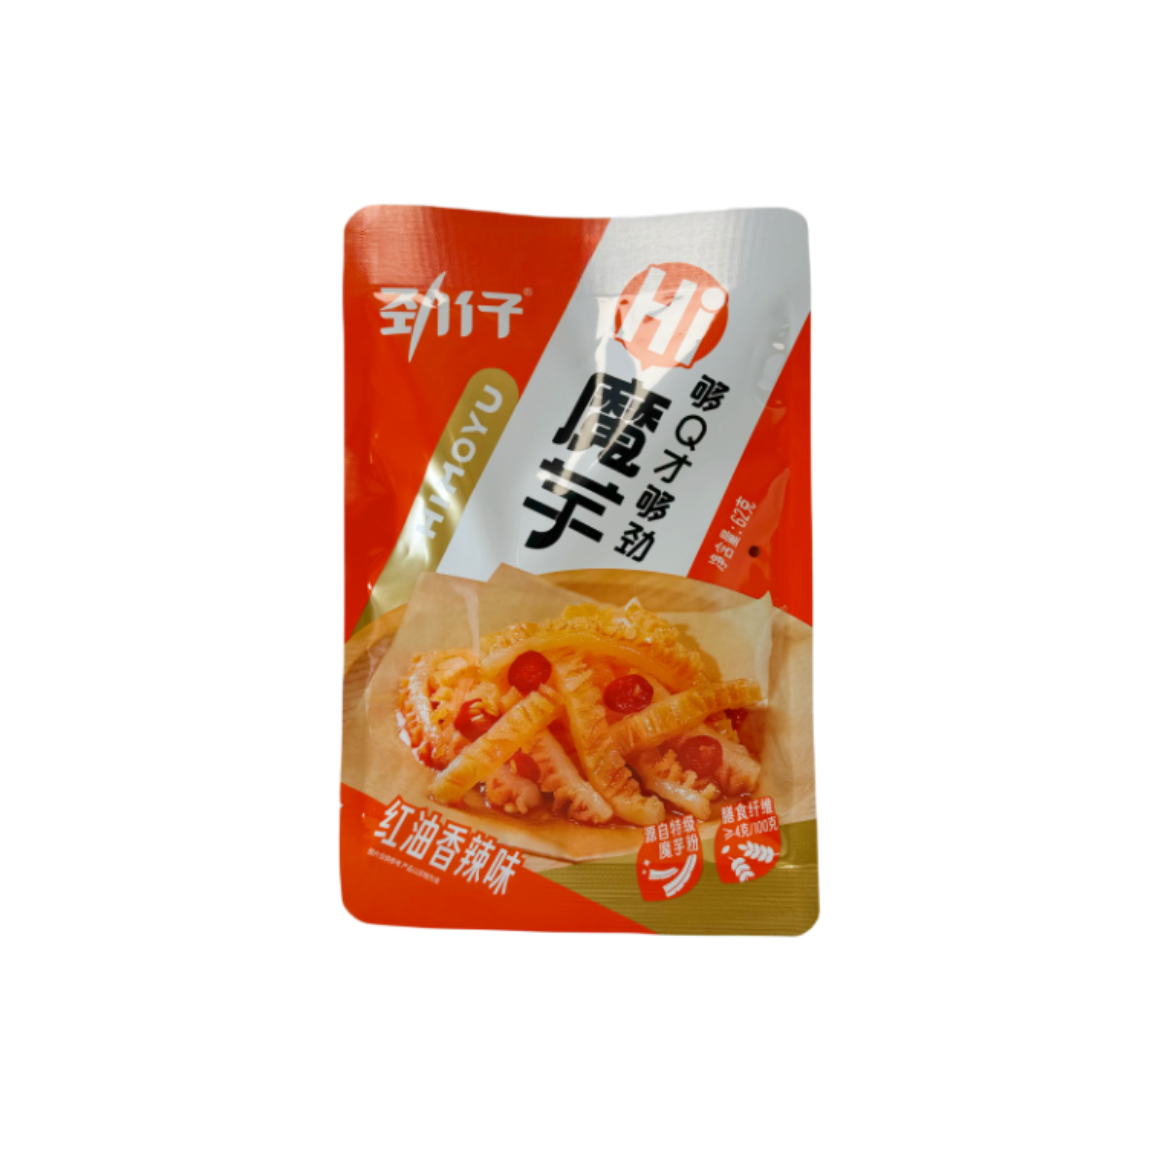 Konjac Snack Spicy Flavor 62g Jin Zai China